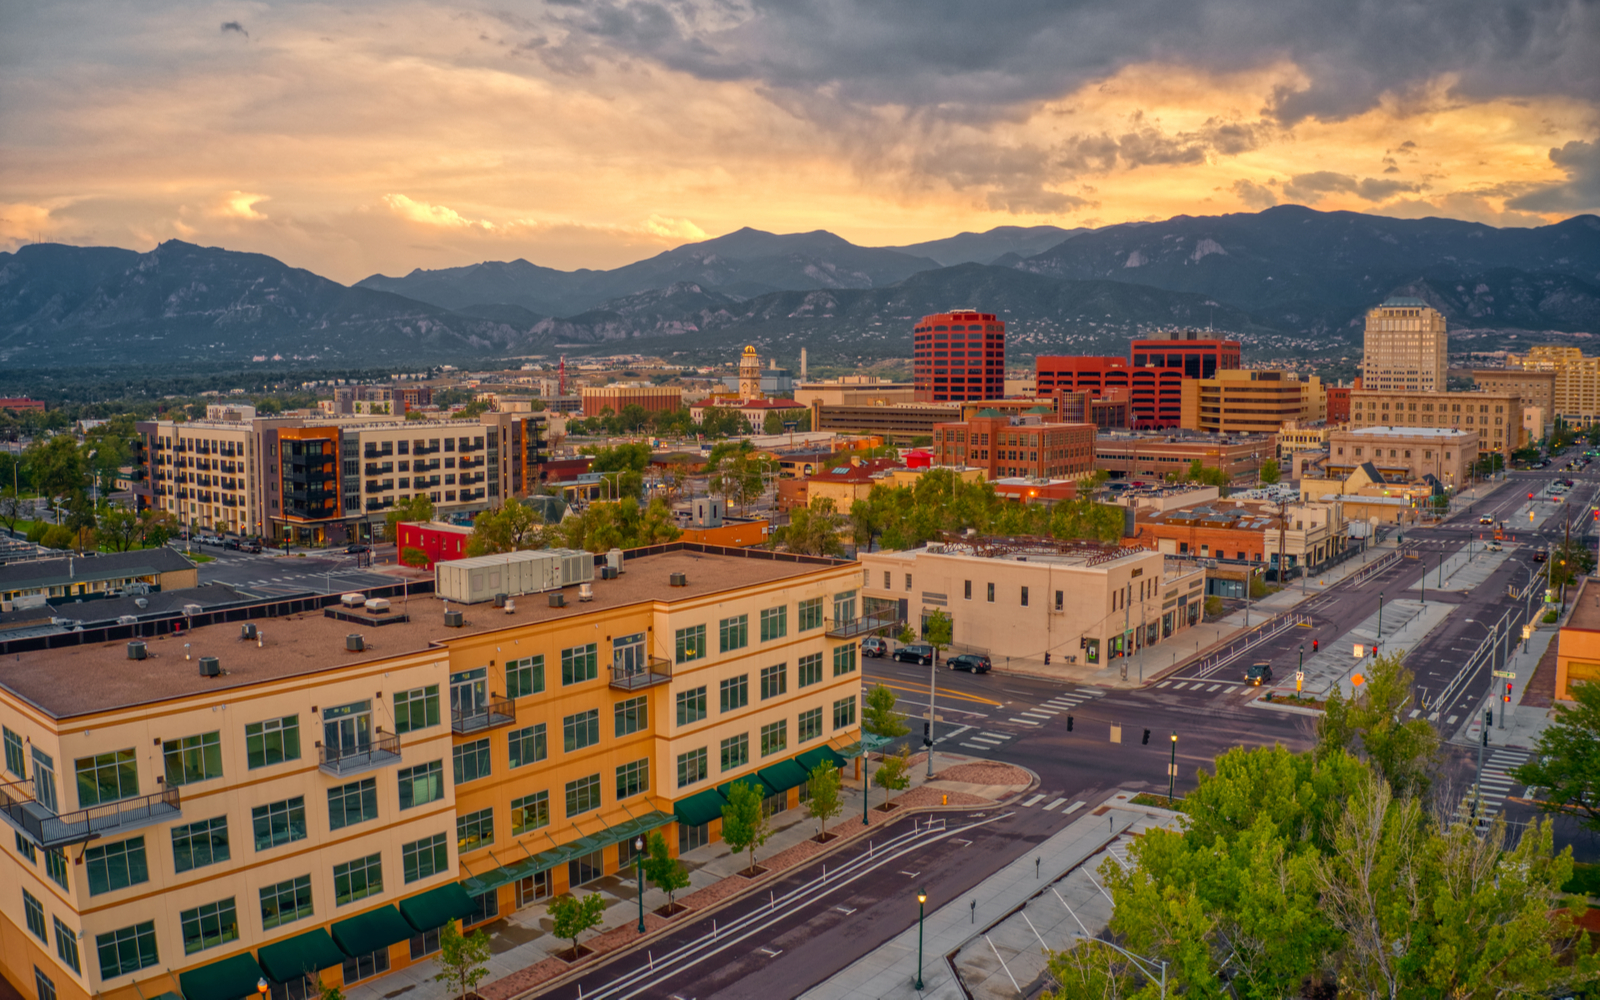 12 Best Things to Do in Colorado Springs in 2022